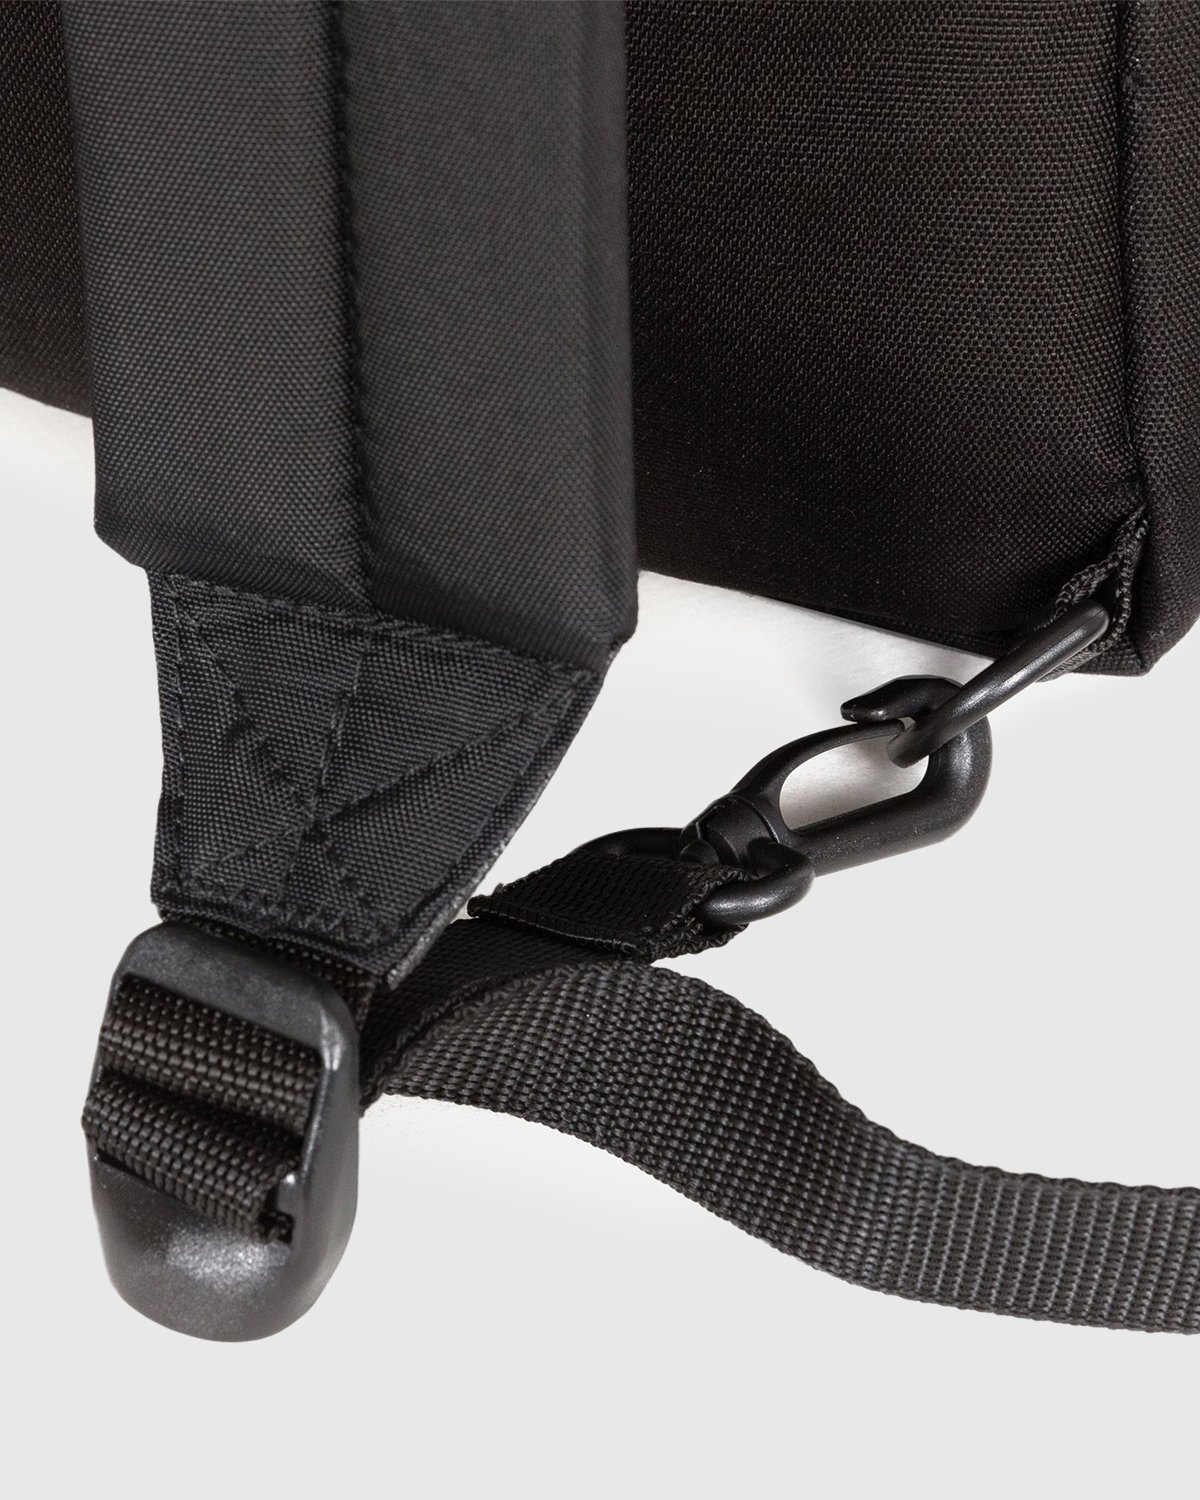 MM6 Maison Margiela x Eastpak - Padded Backpack Black - Accessories - Black - Image 7